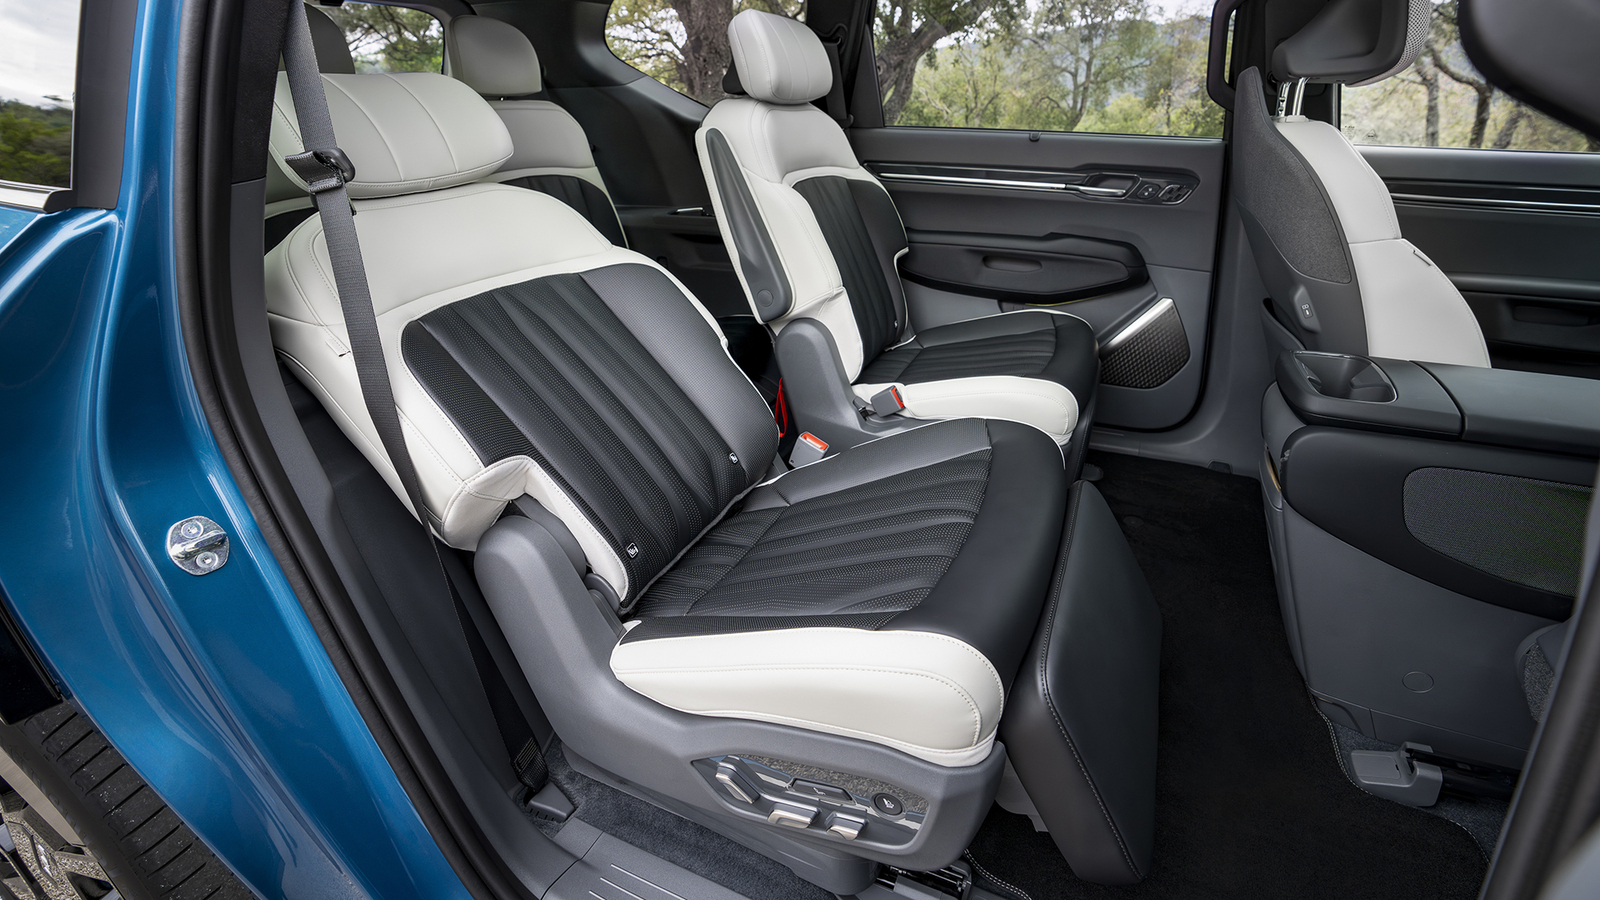 KIA EV9 gtline interior 6 seater relaxation digital 1920x1080 023